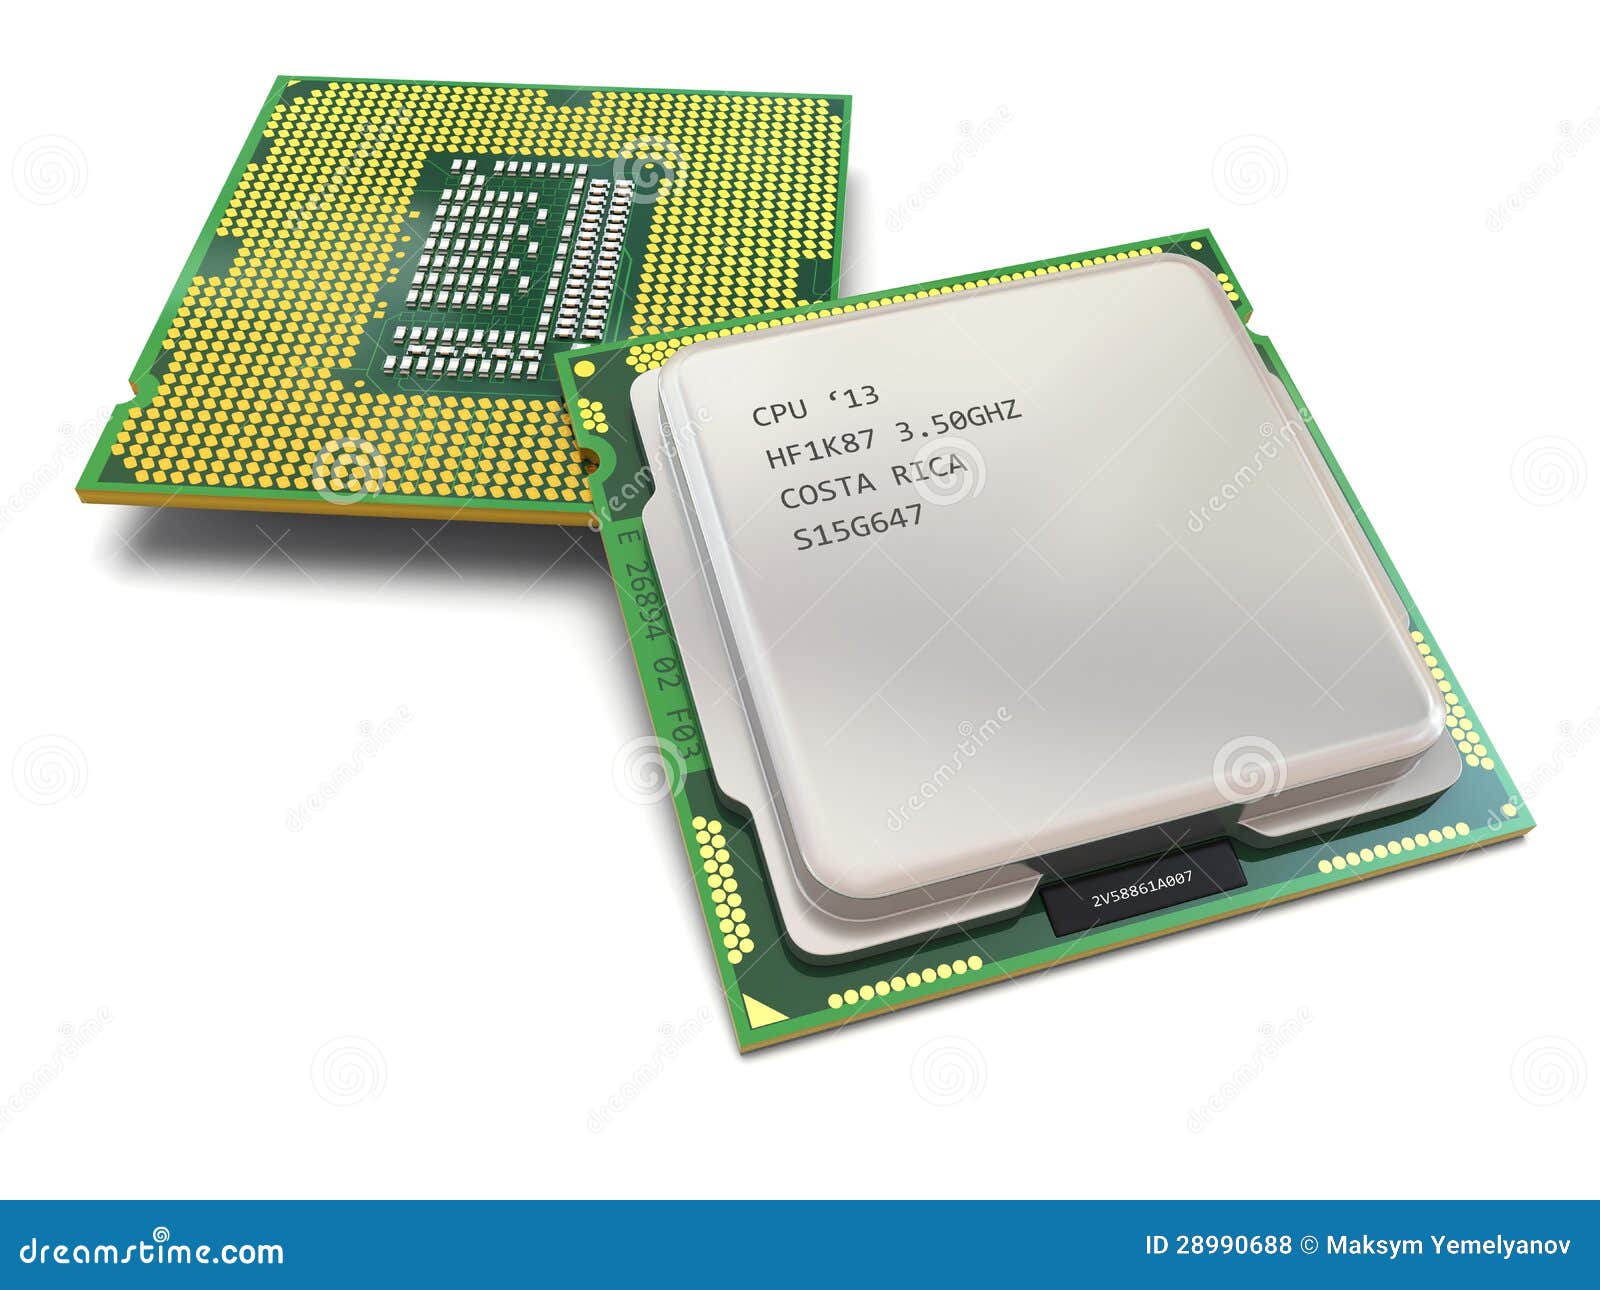 CPU. Computer processors stock illustration. Illustration of electronics - 28990688